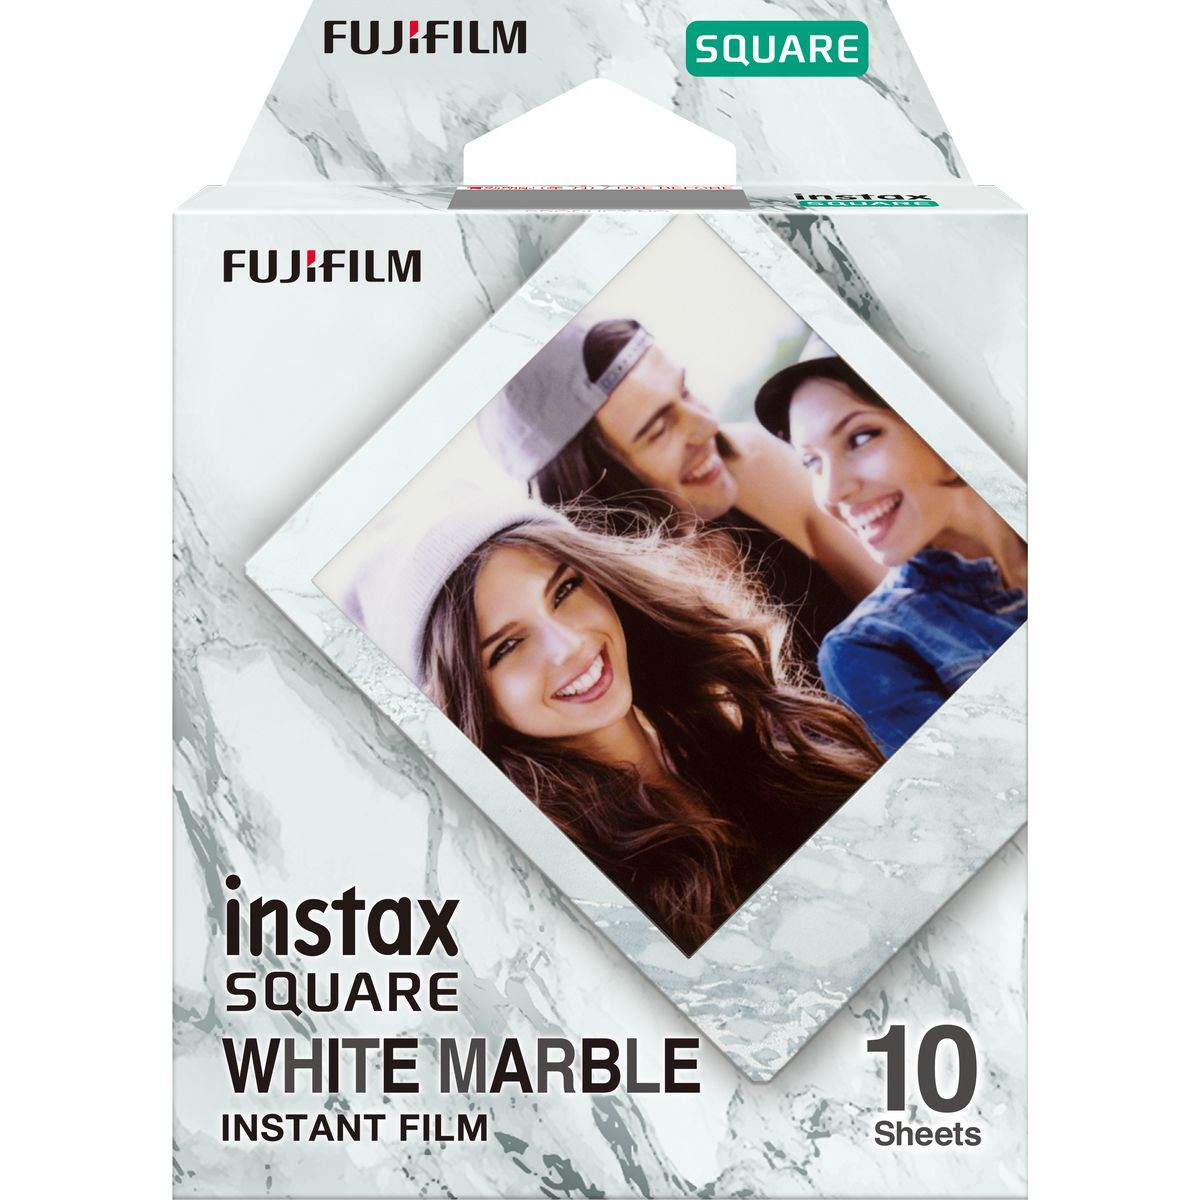 Fujifilm instax square film white marble